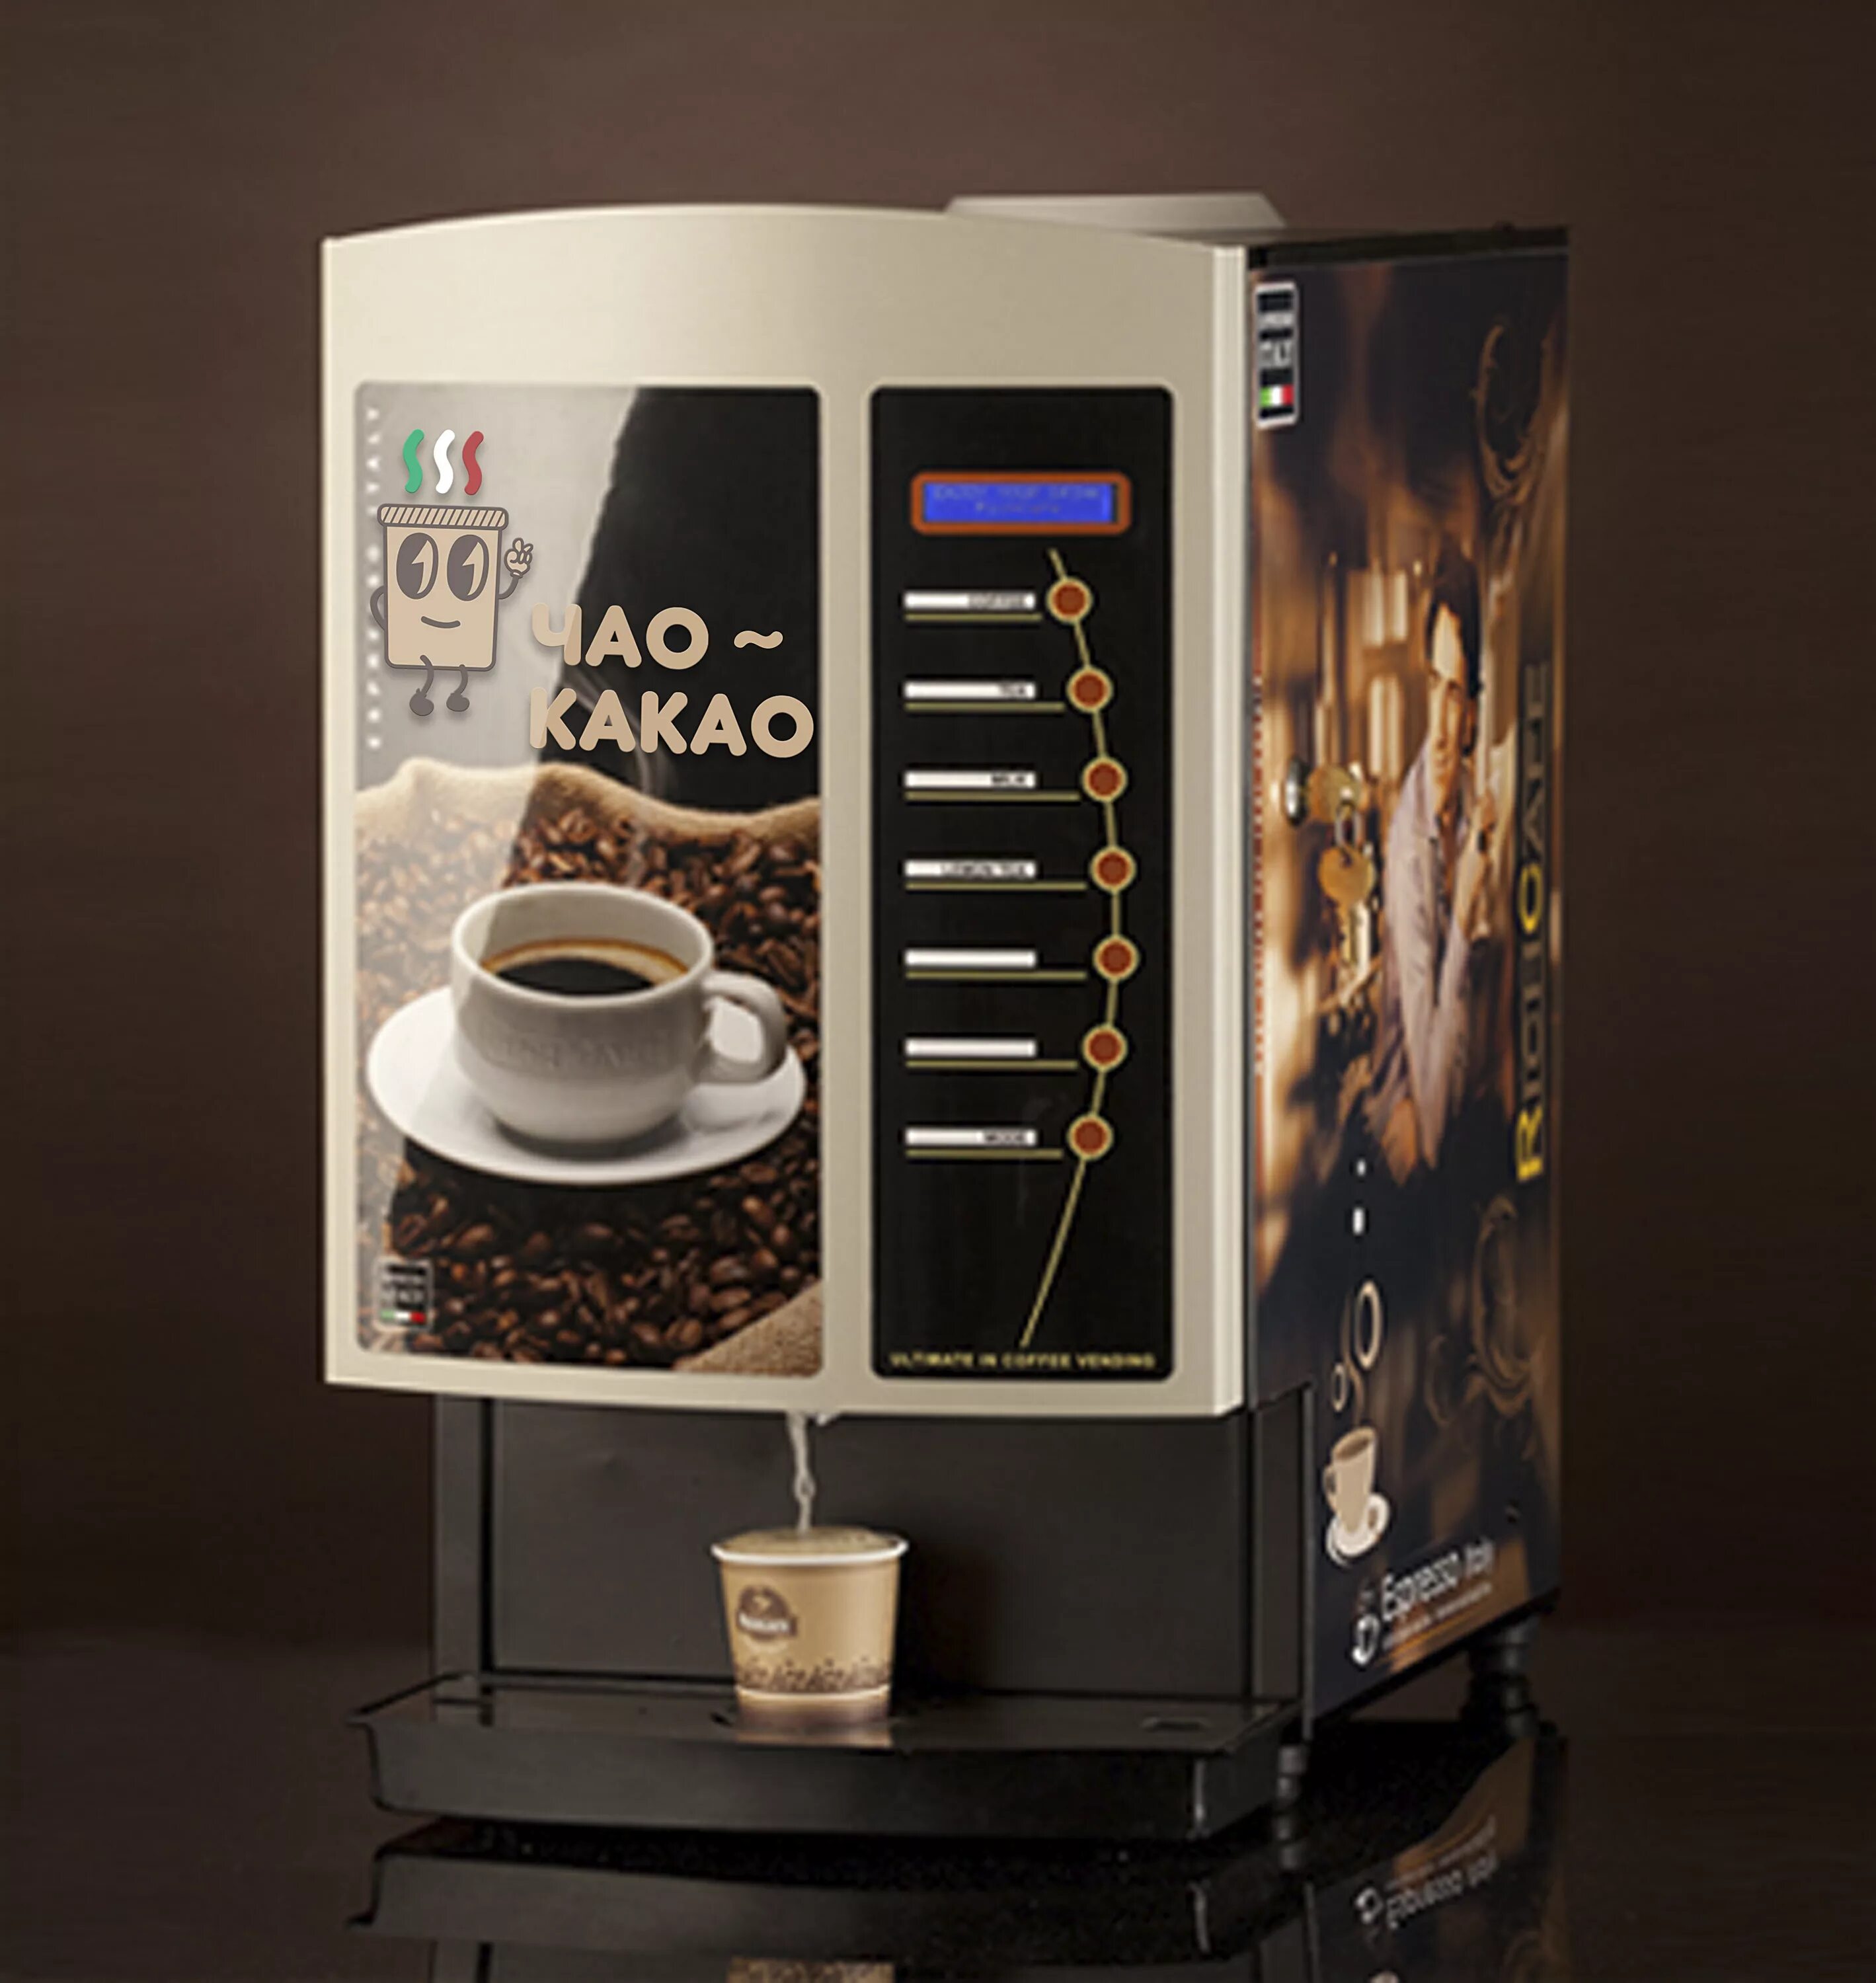 Кофейный аппарат кофе. Вендинговый аппарат кофе Nespresso. Vending кофе Machine. Кофеаппарат 307b-1. Горячий шоколад мини вендинг автомат.